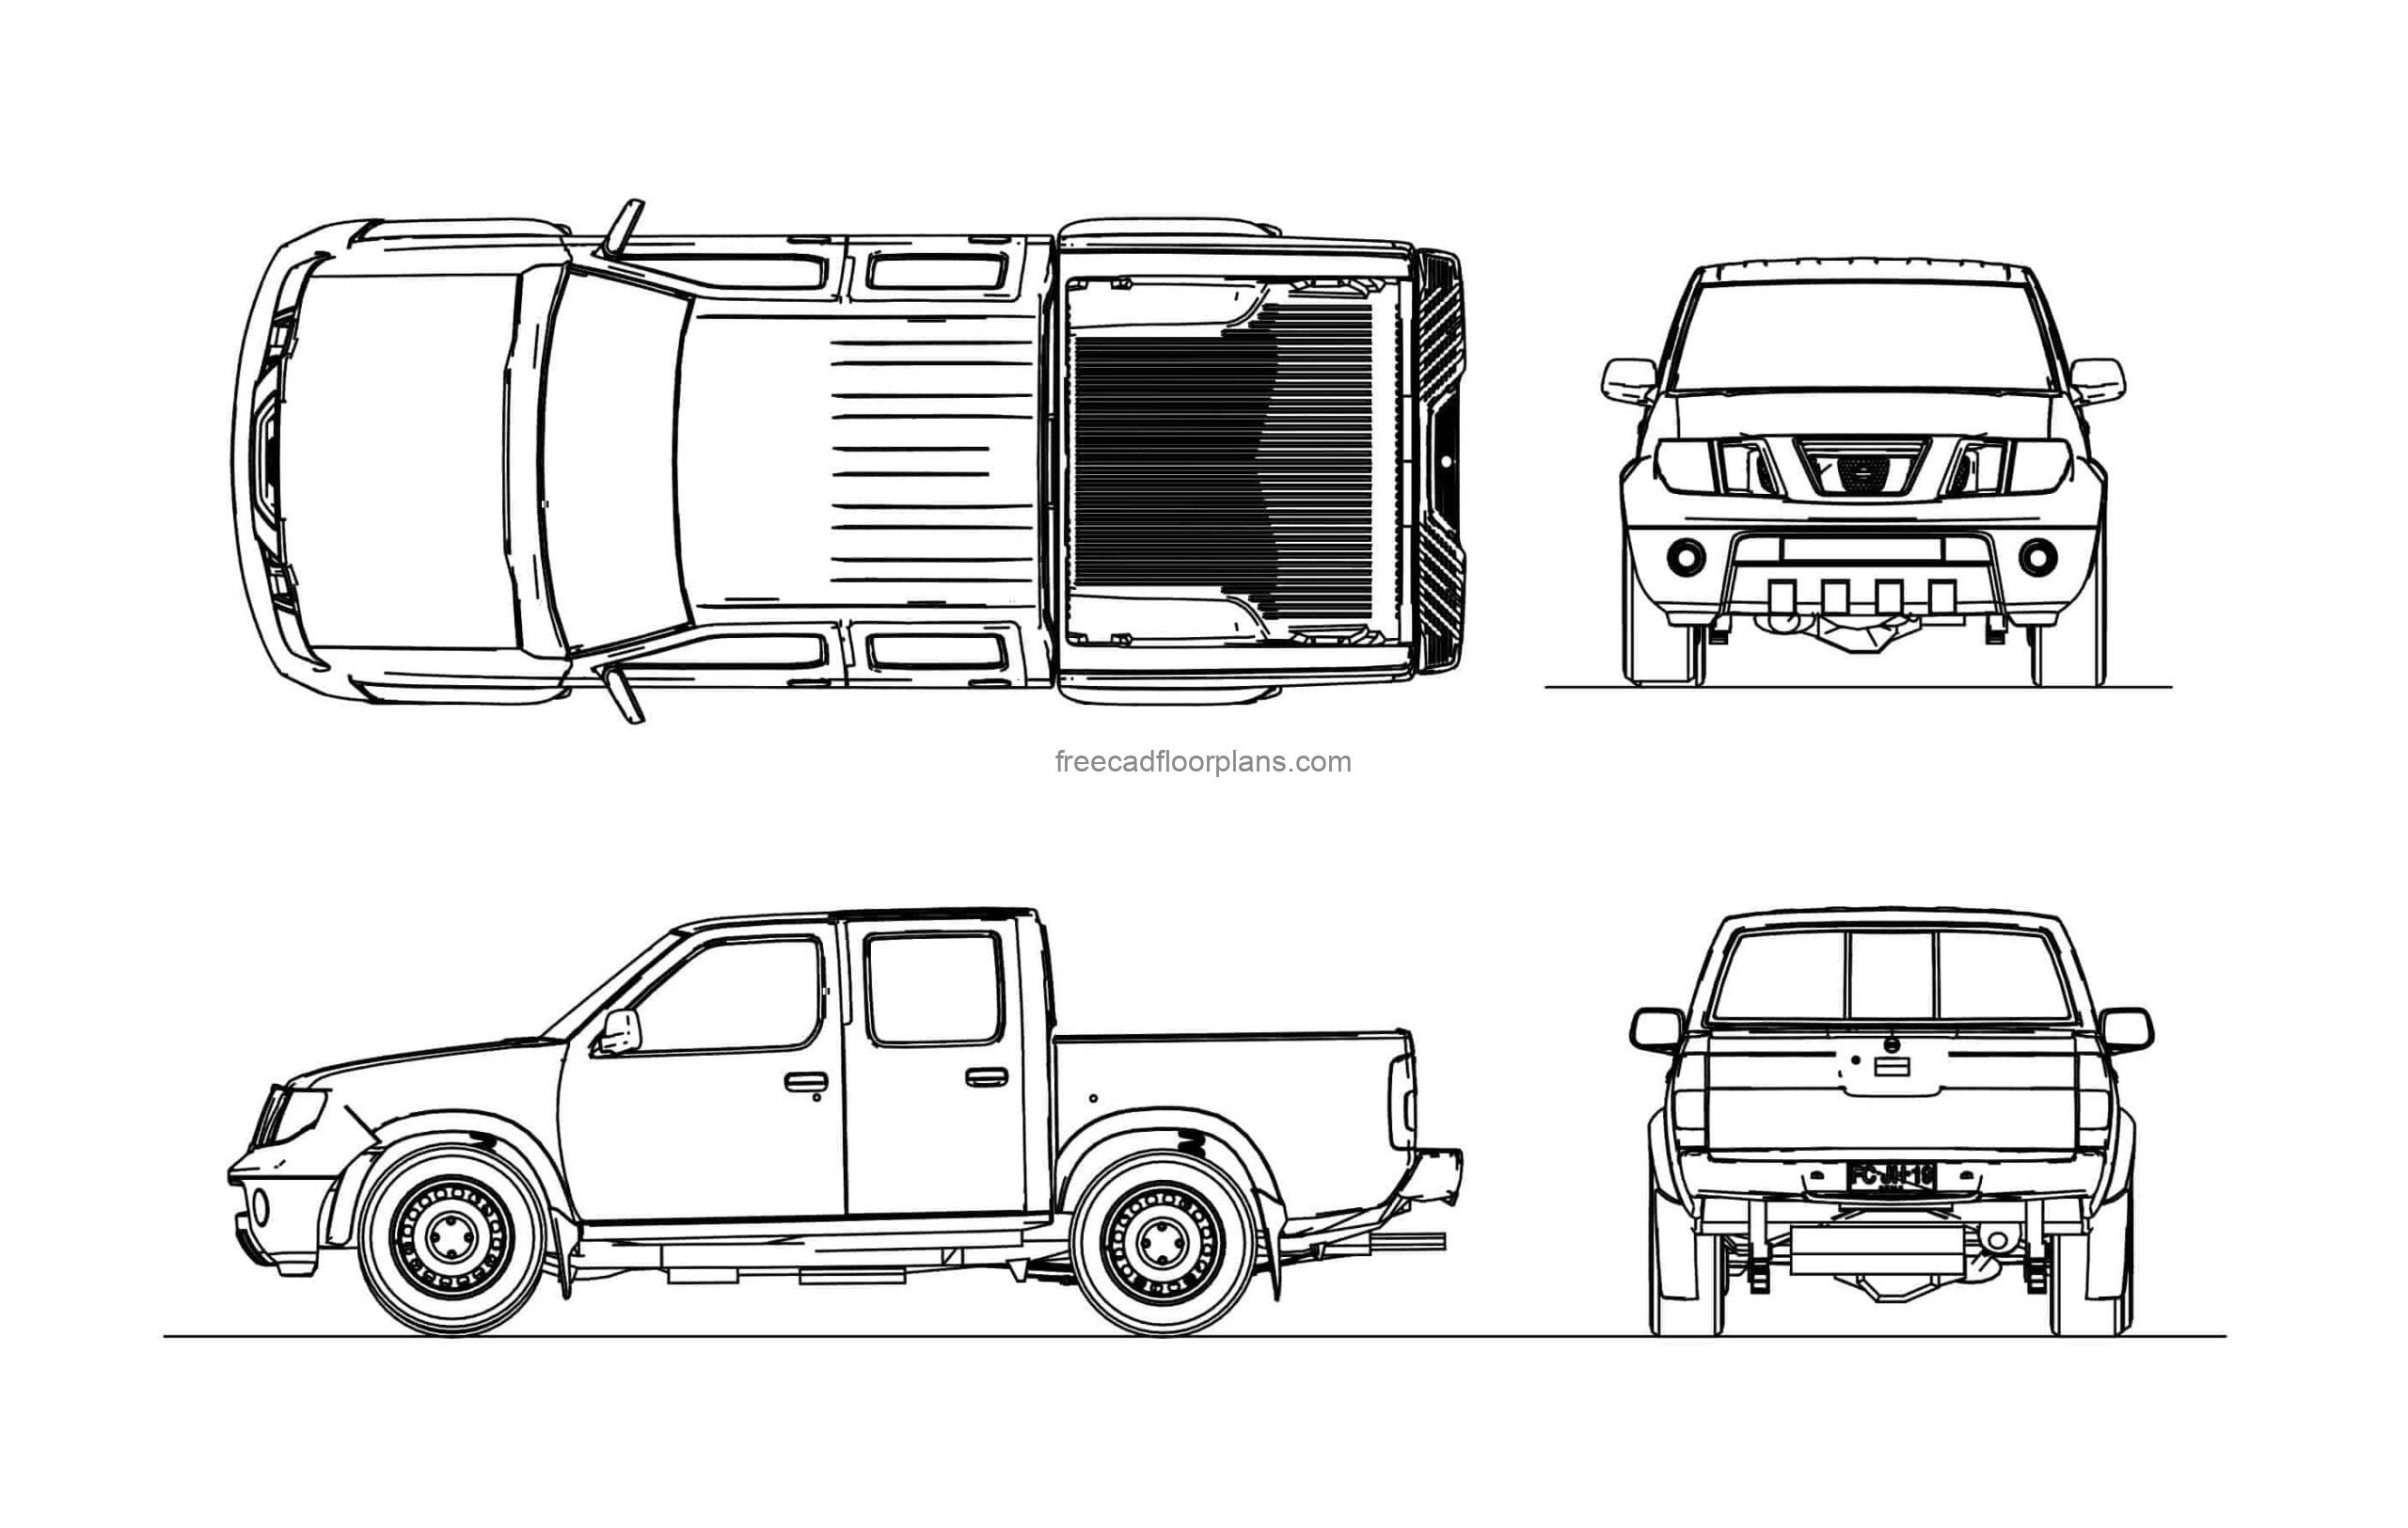 Nissan navara cad block drawing 2d views, plan and elevations for free download